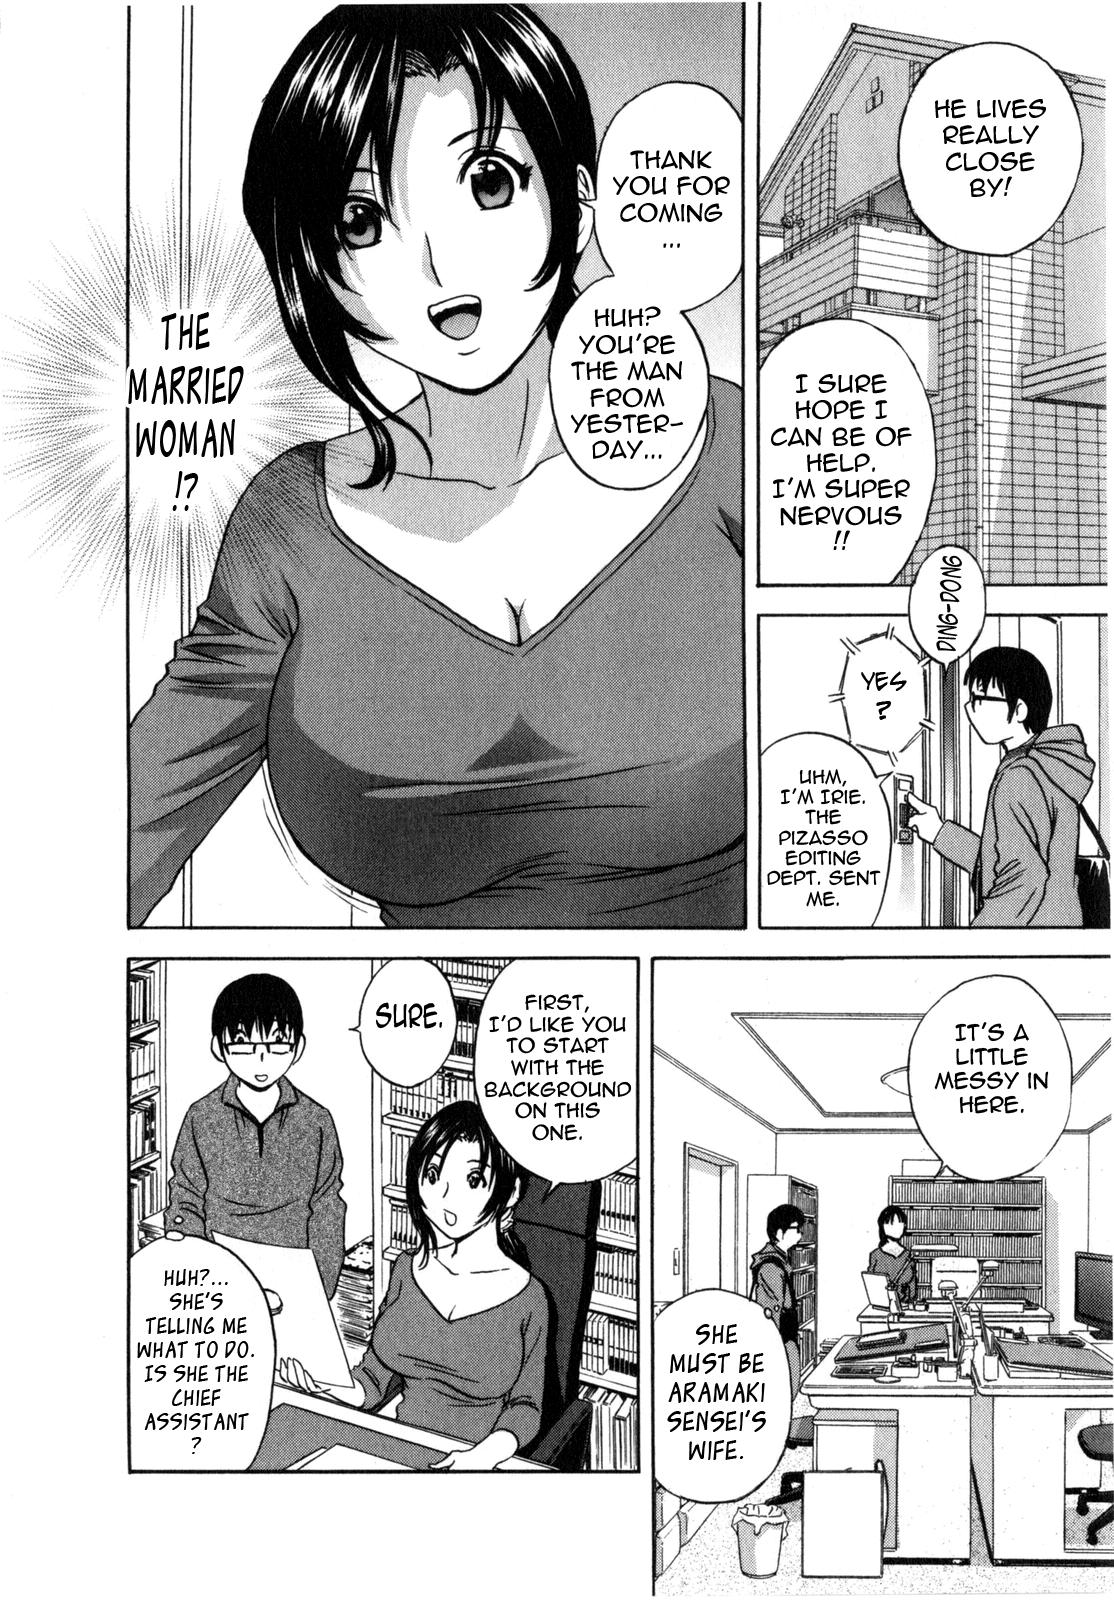 Life with Married Women Just Like a Manga 1 12